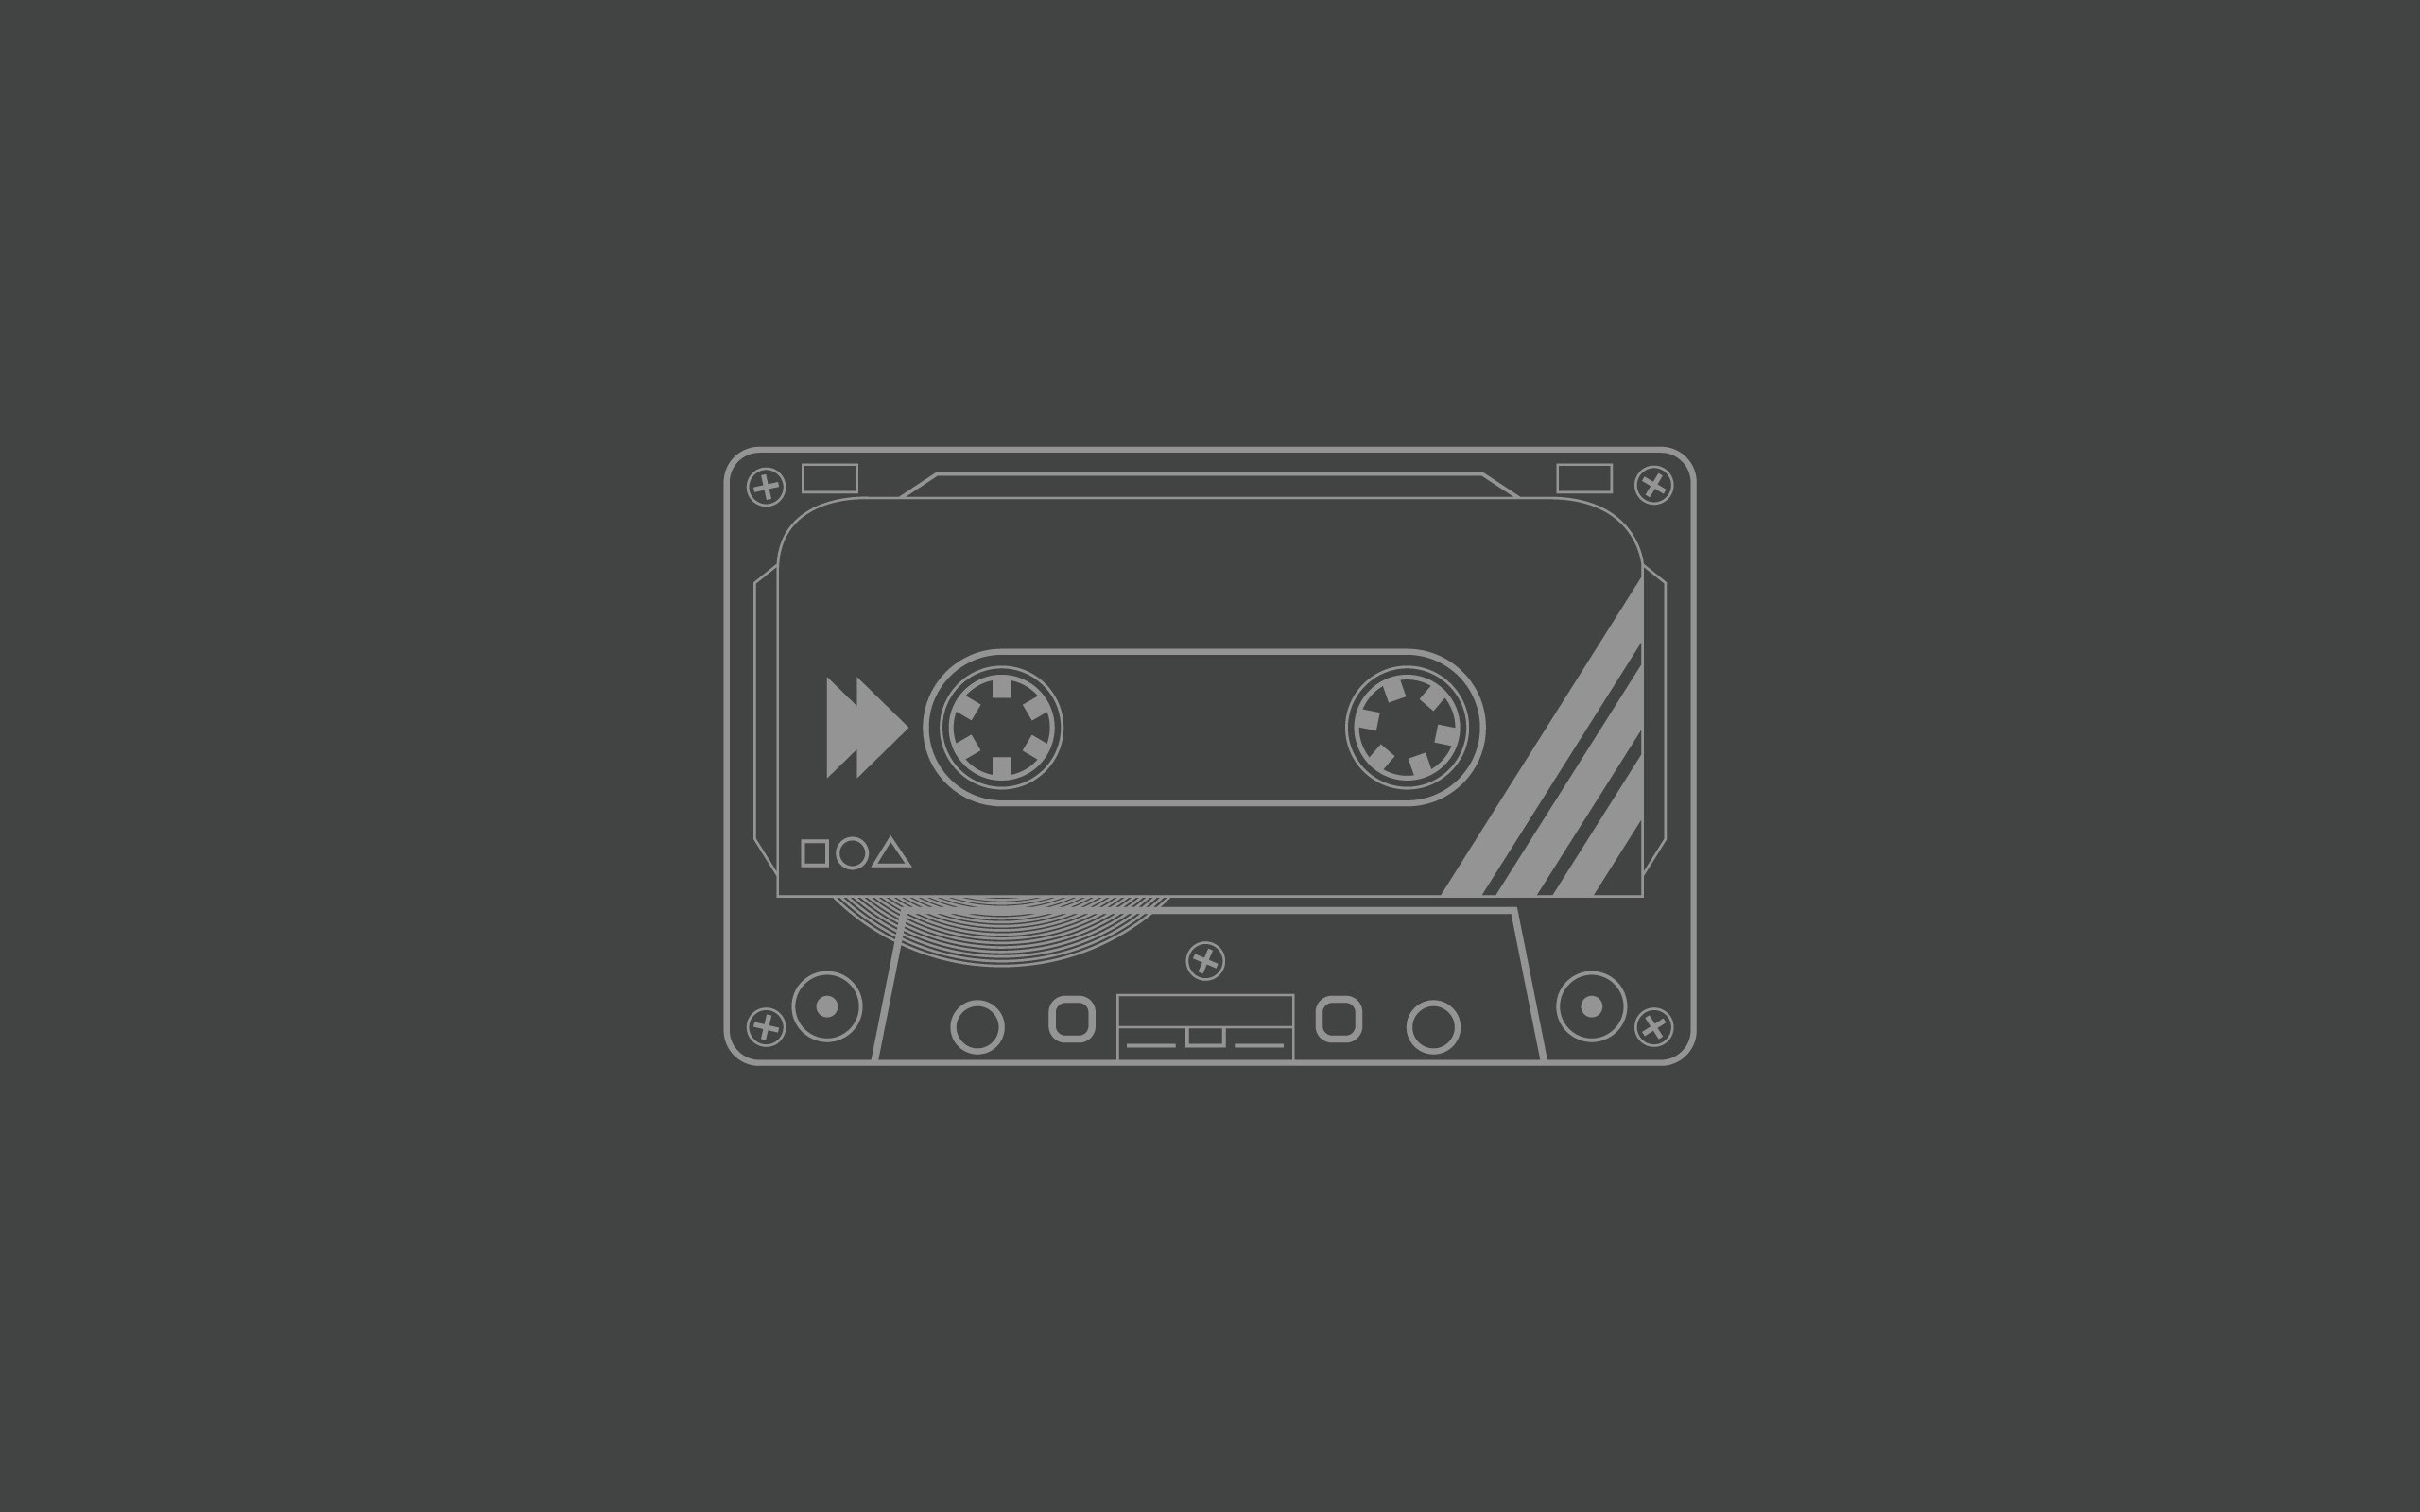 General 2560x1600 cassette minimalism audio gray Flatdesign simple background gray background